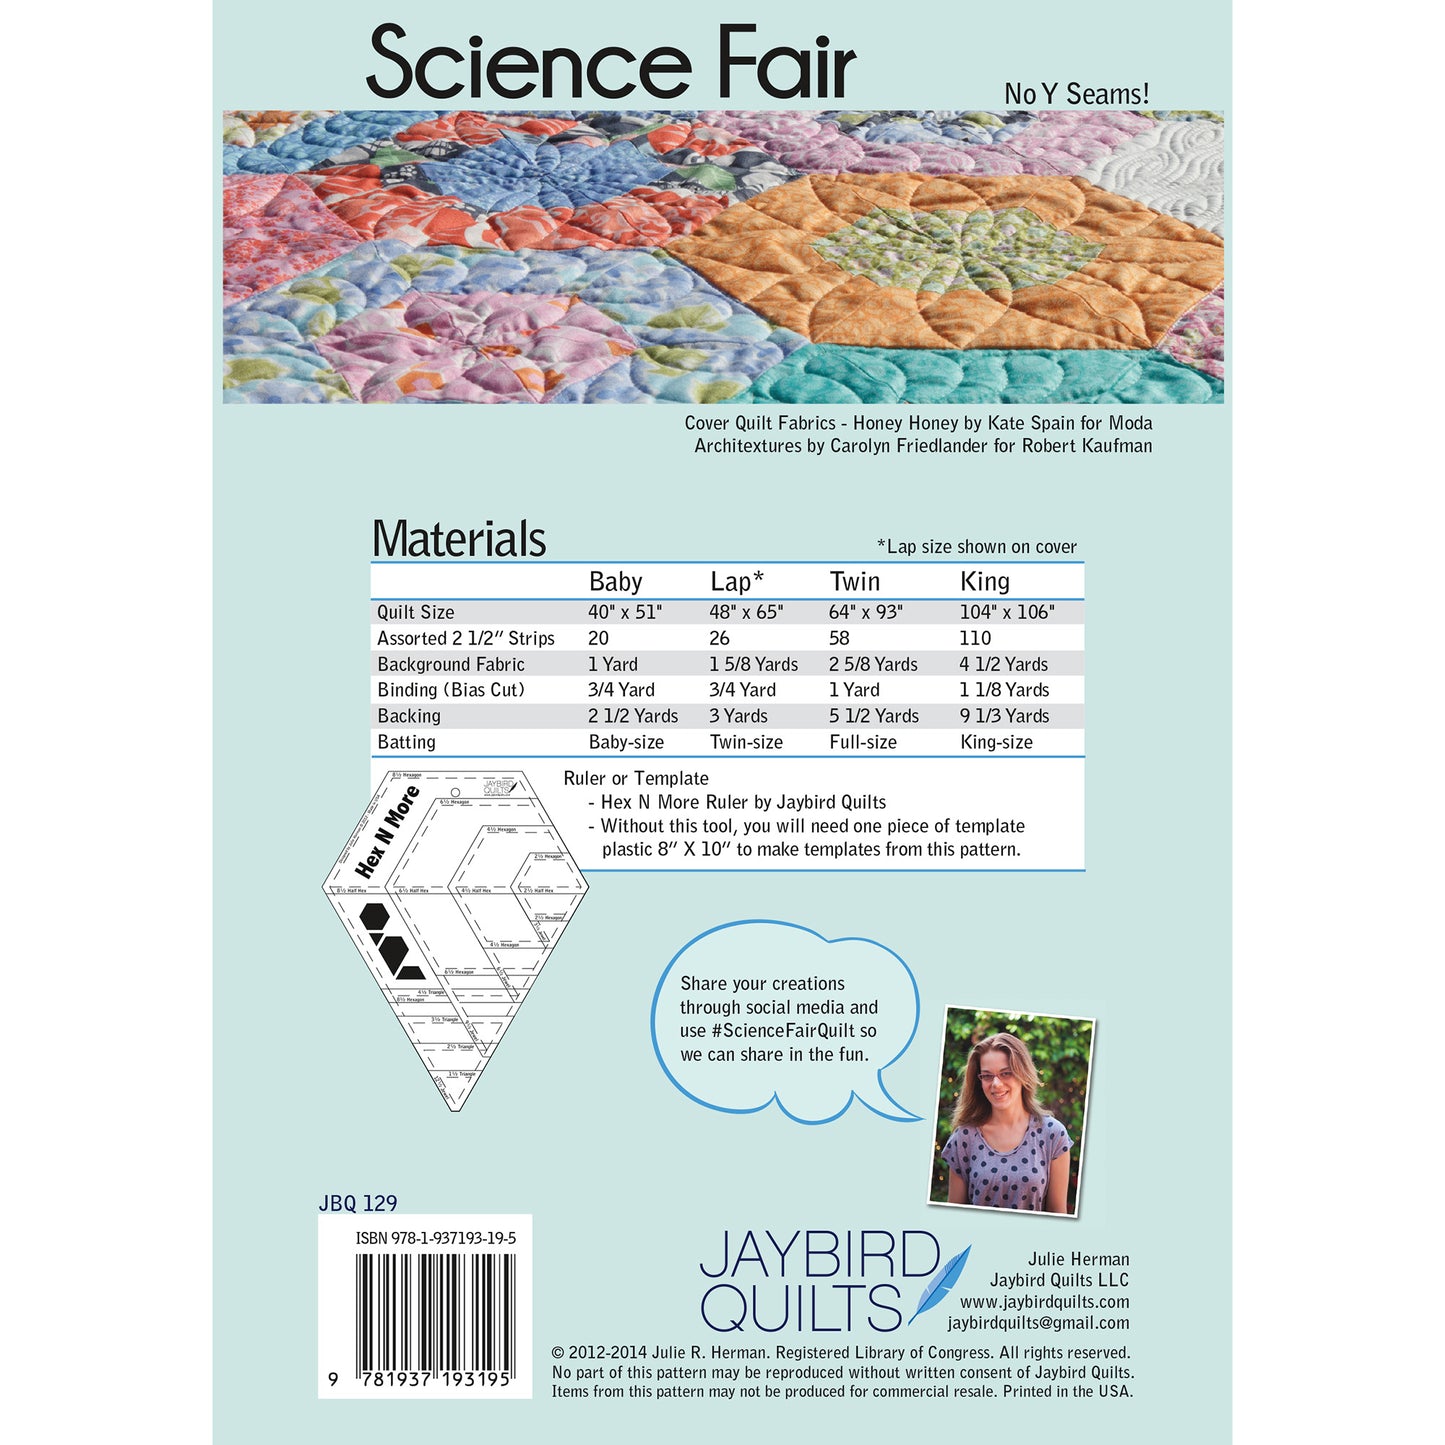 Science Fair PDF Pattern